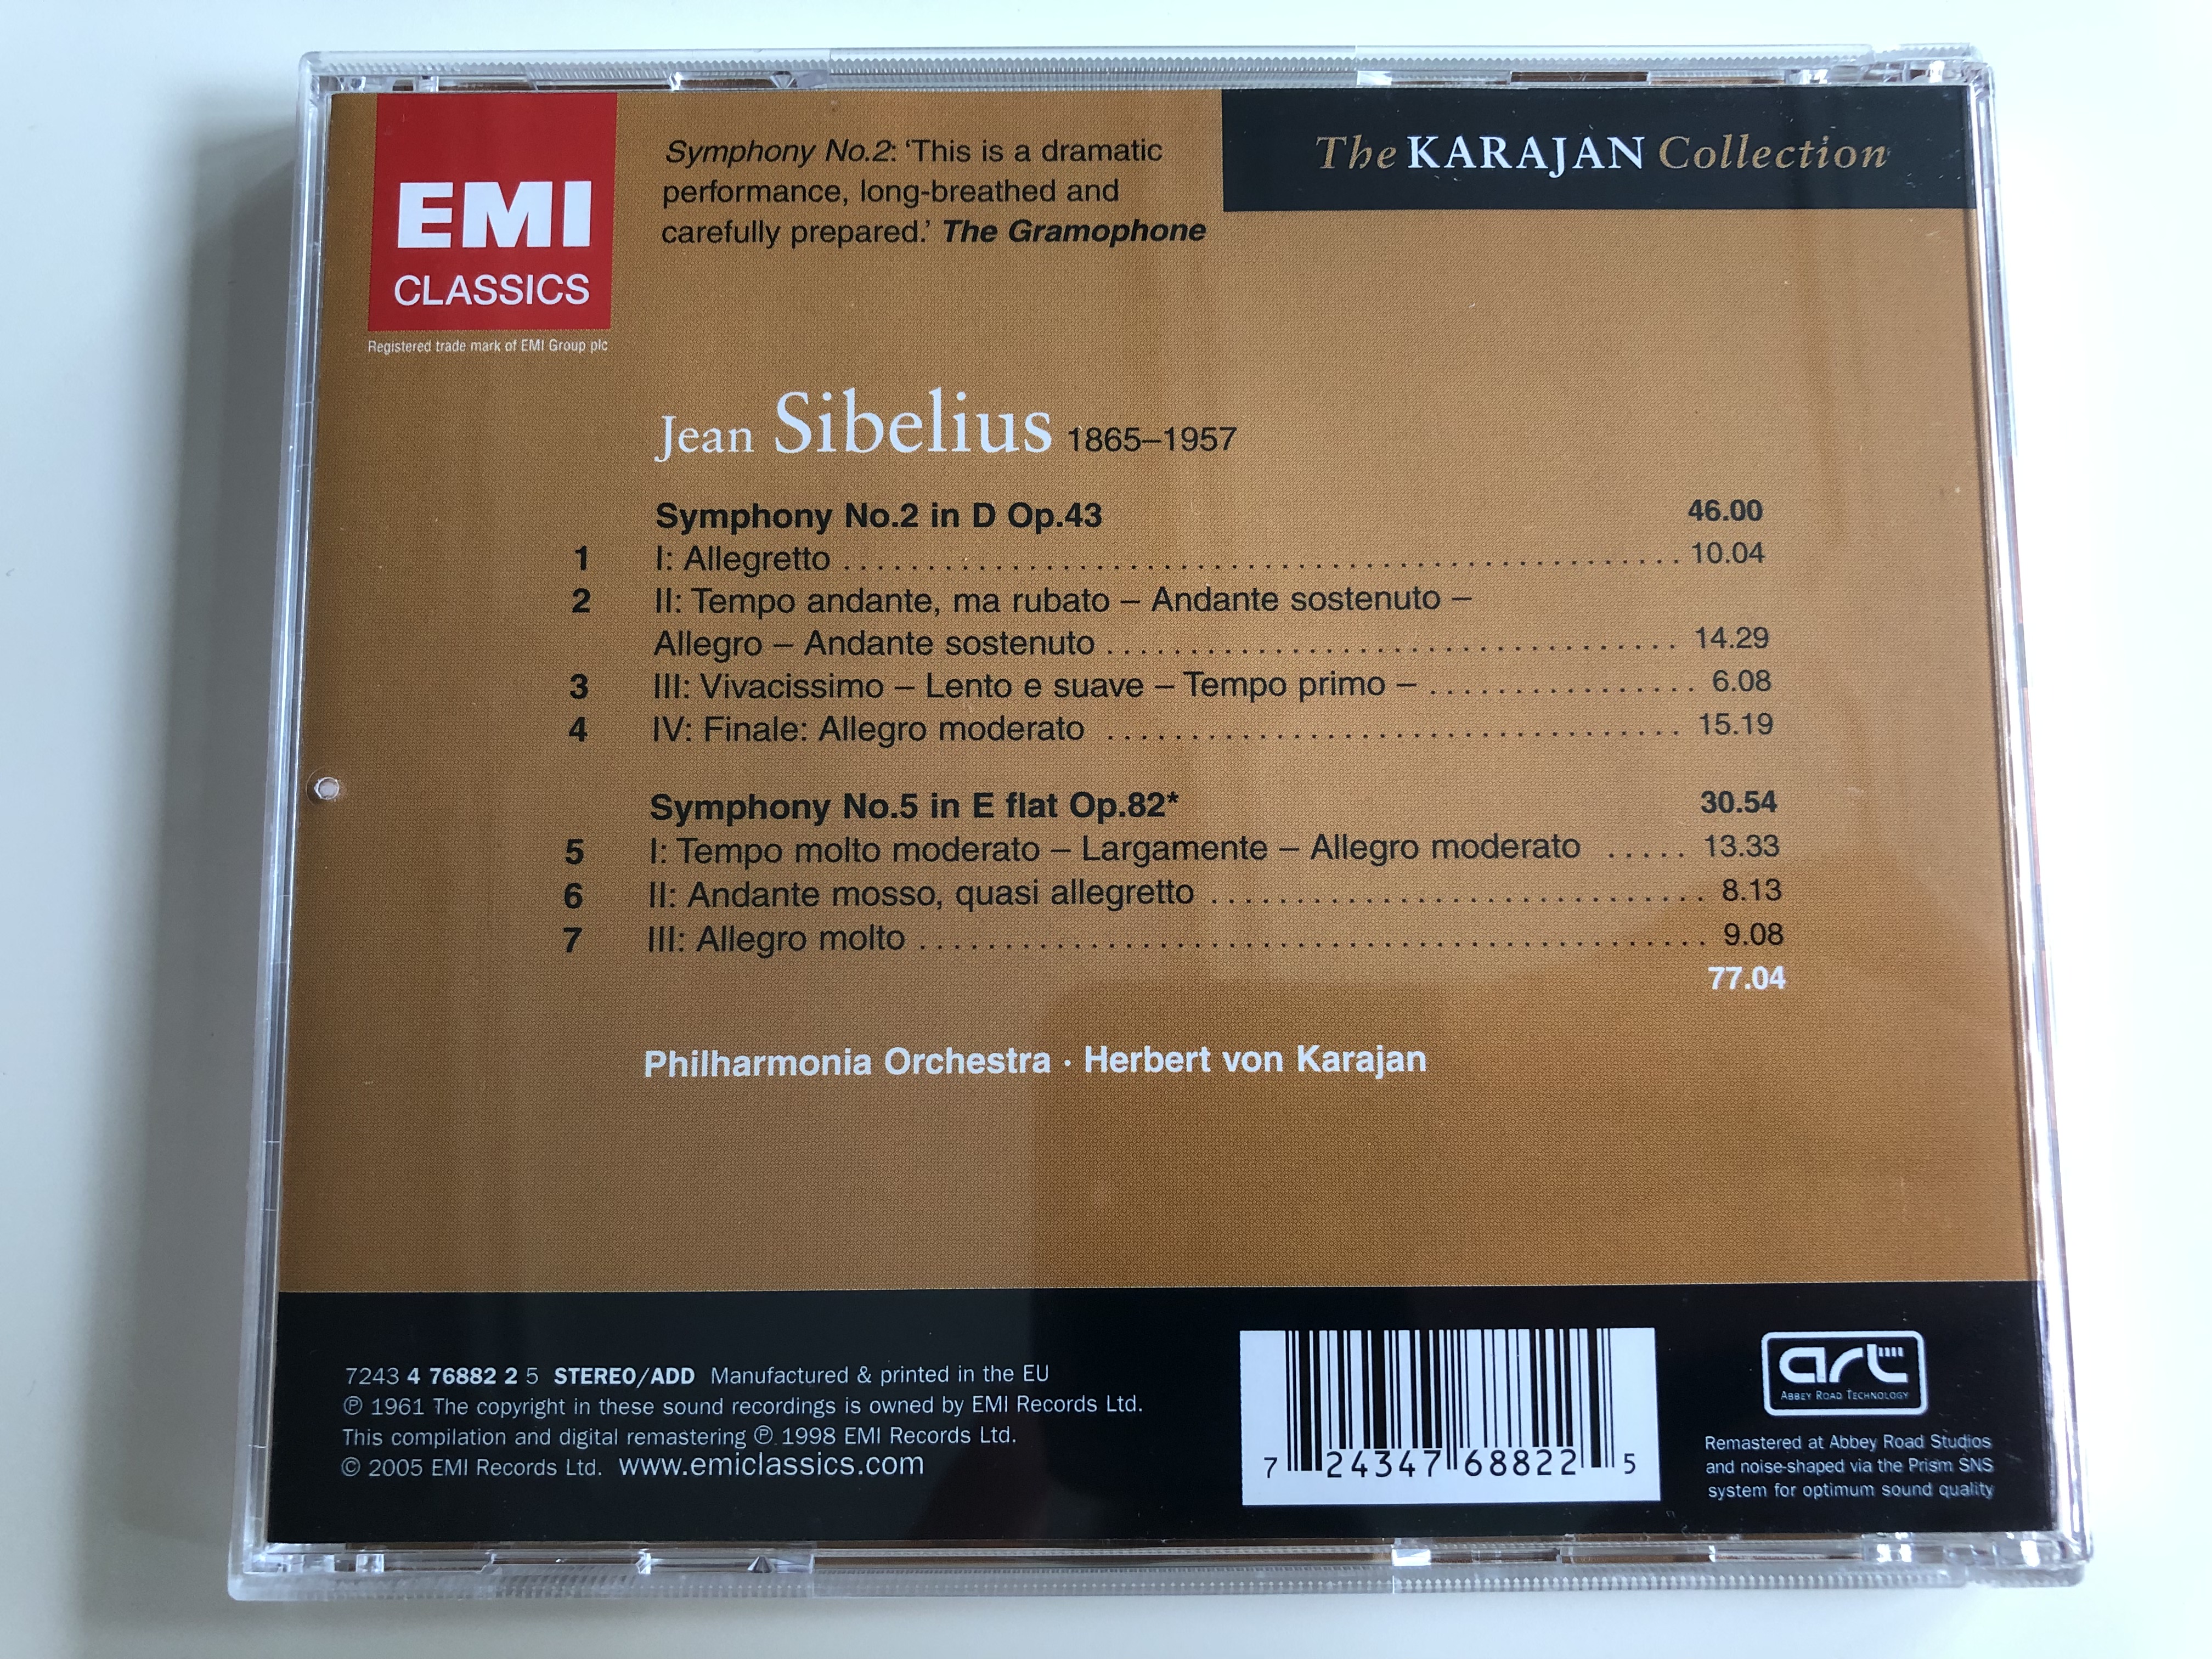 jean-sibelius-symphonies-2-5-the-karajan-collection-philharmonia-orchestra-conducted-by-herbert-von-karajan-audio-cd-1998-emi-classics-3-.jpg